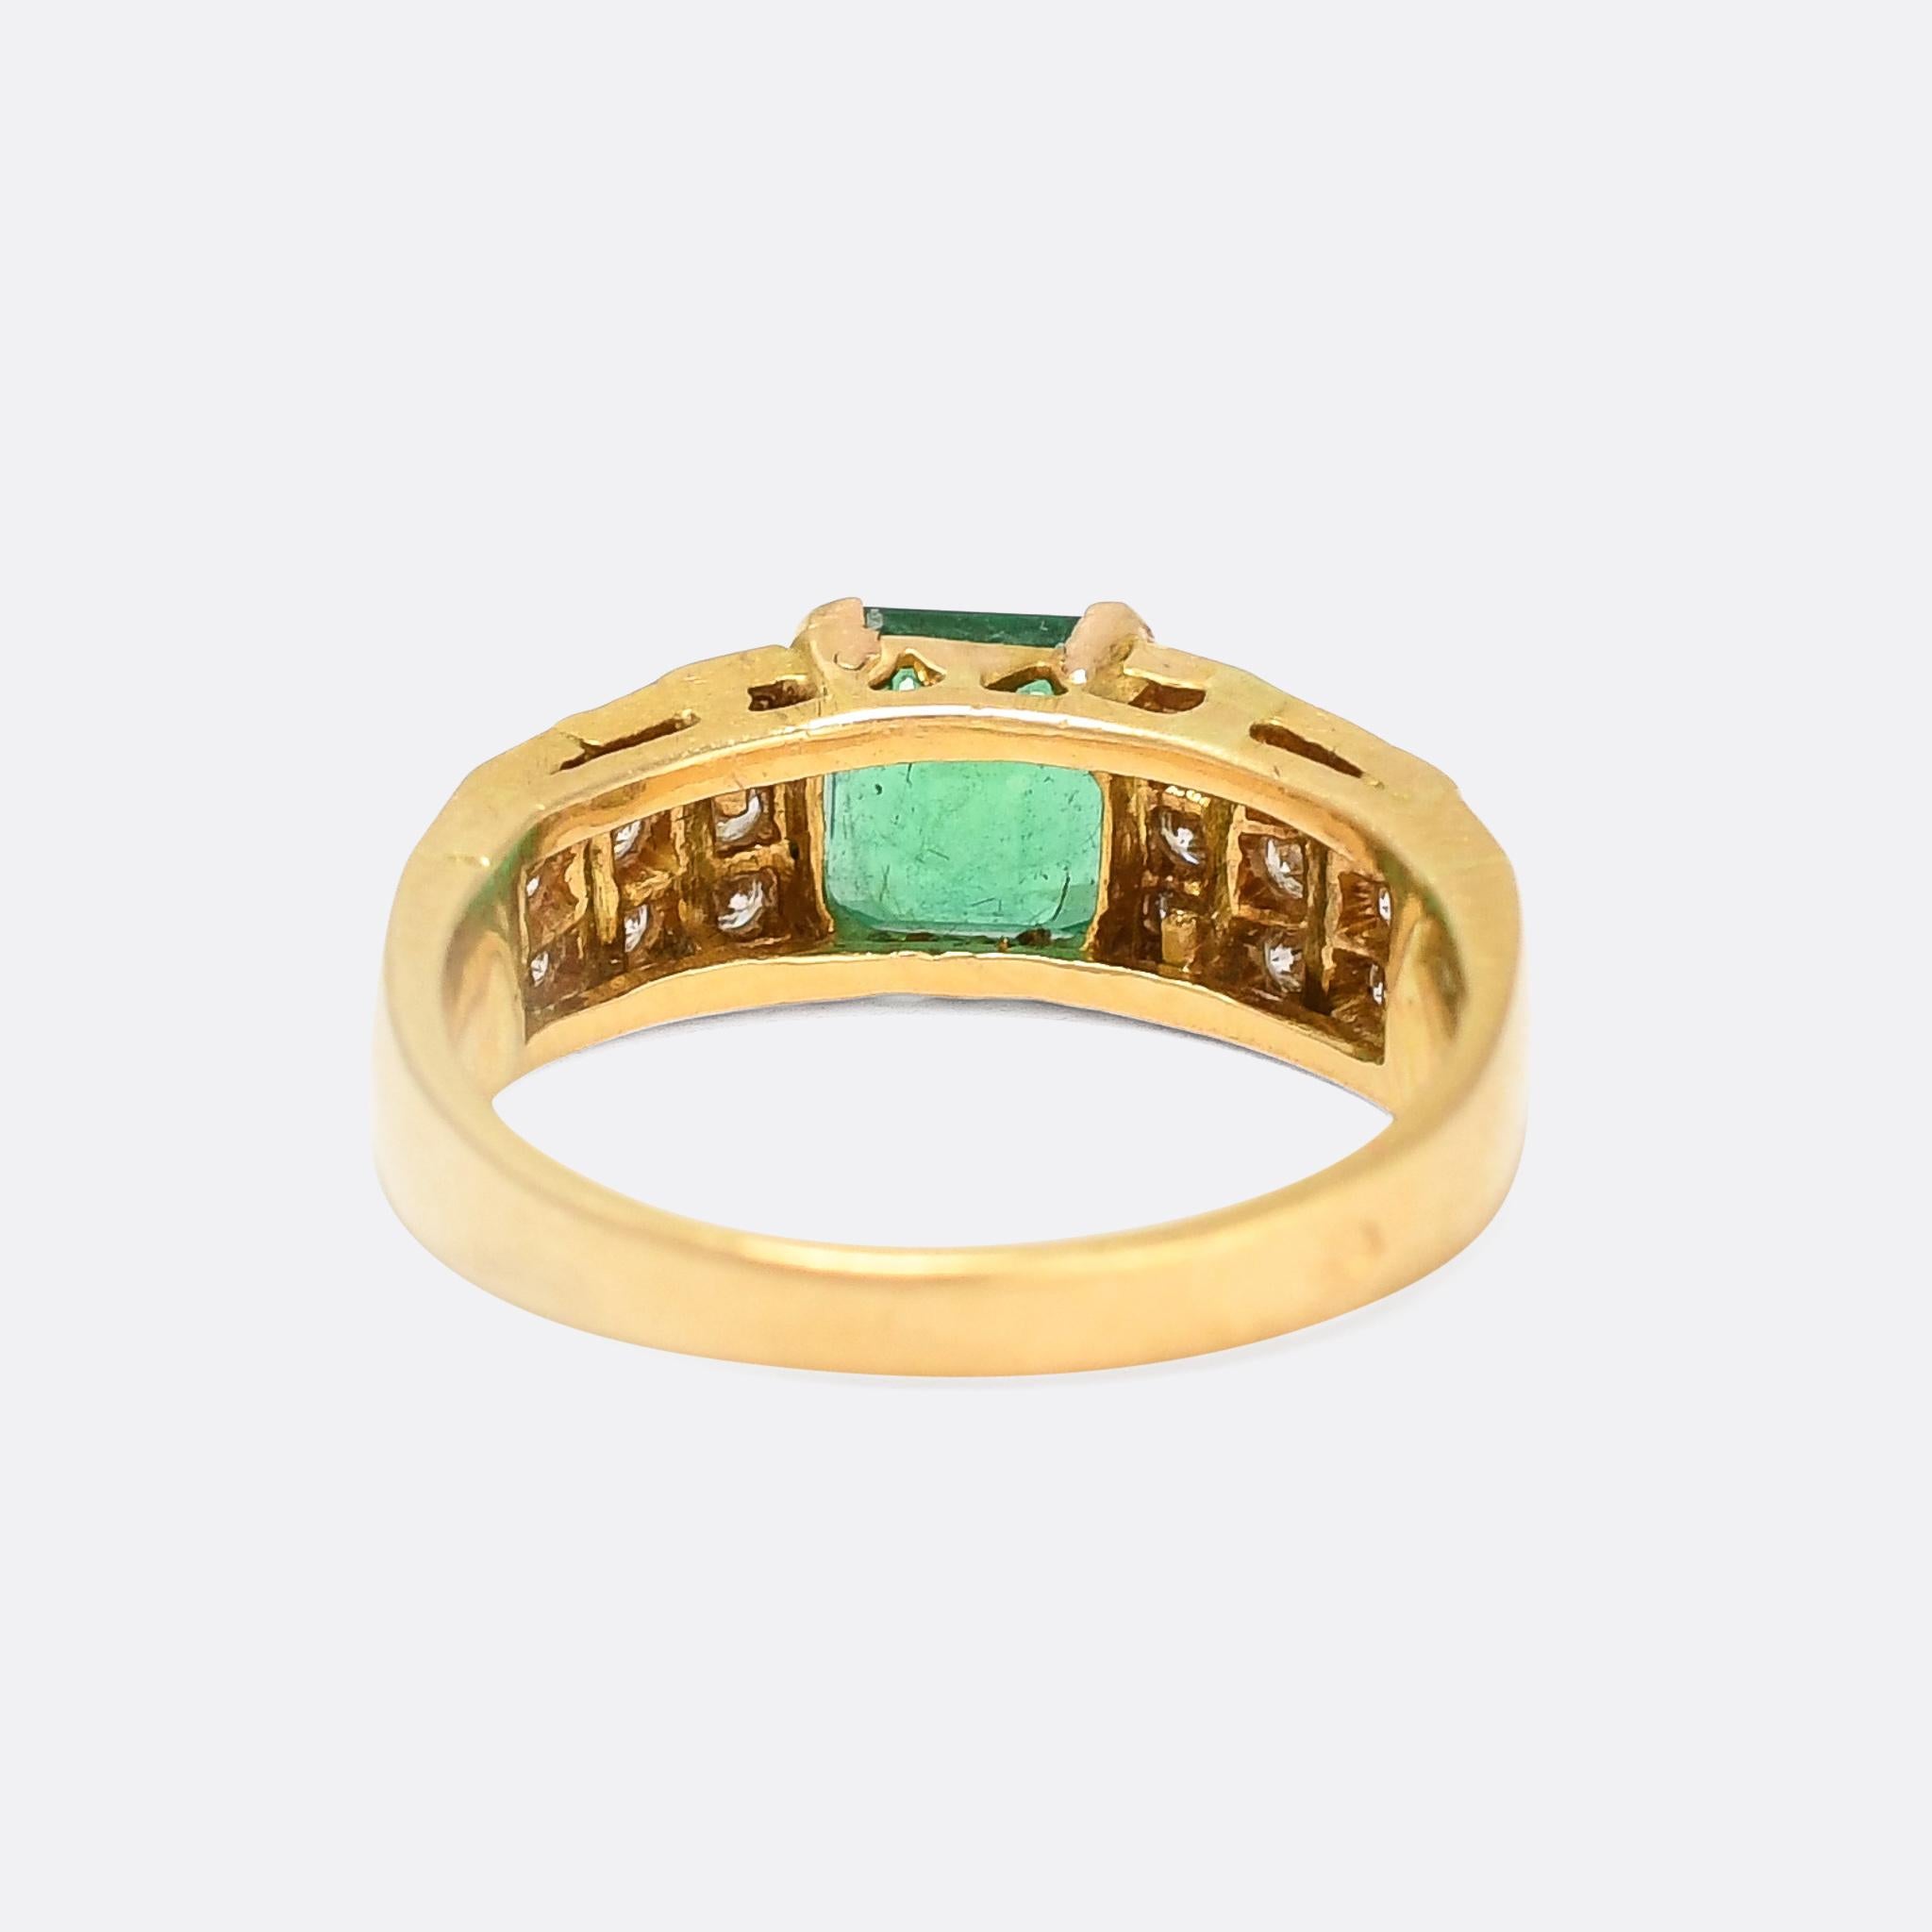 Emerald Cut Vintage Art Deco Style Emerald Diamond Ring